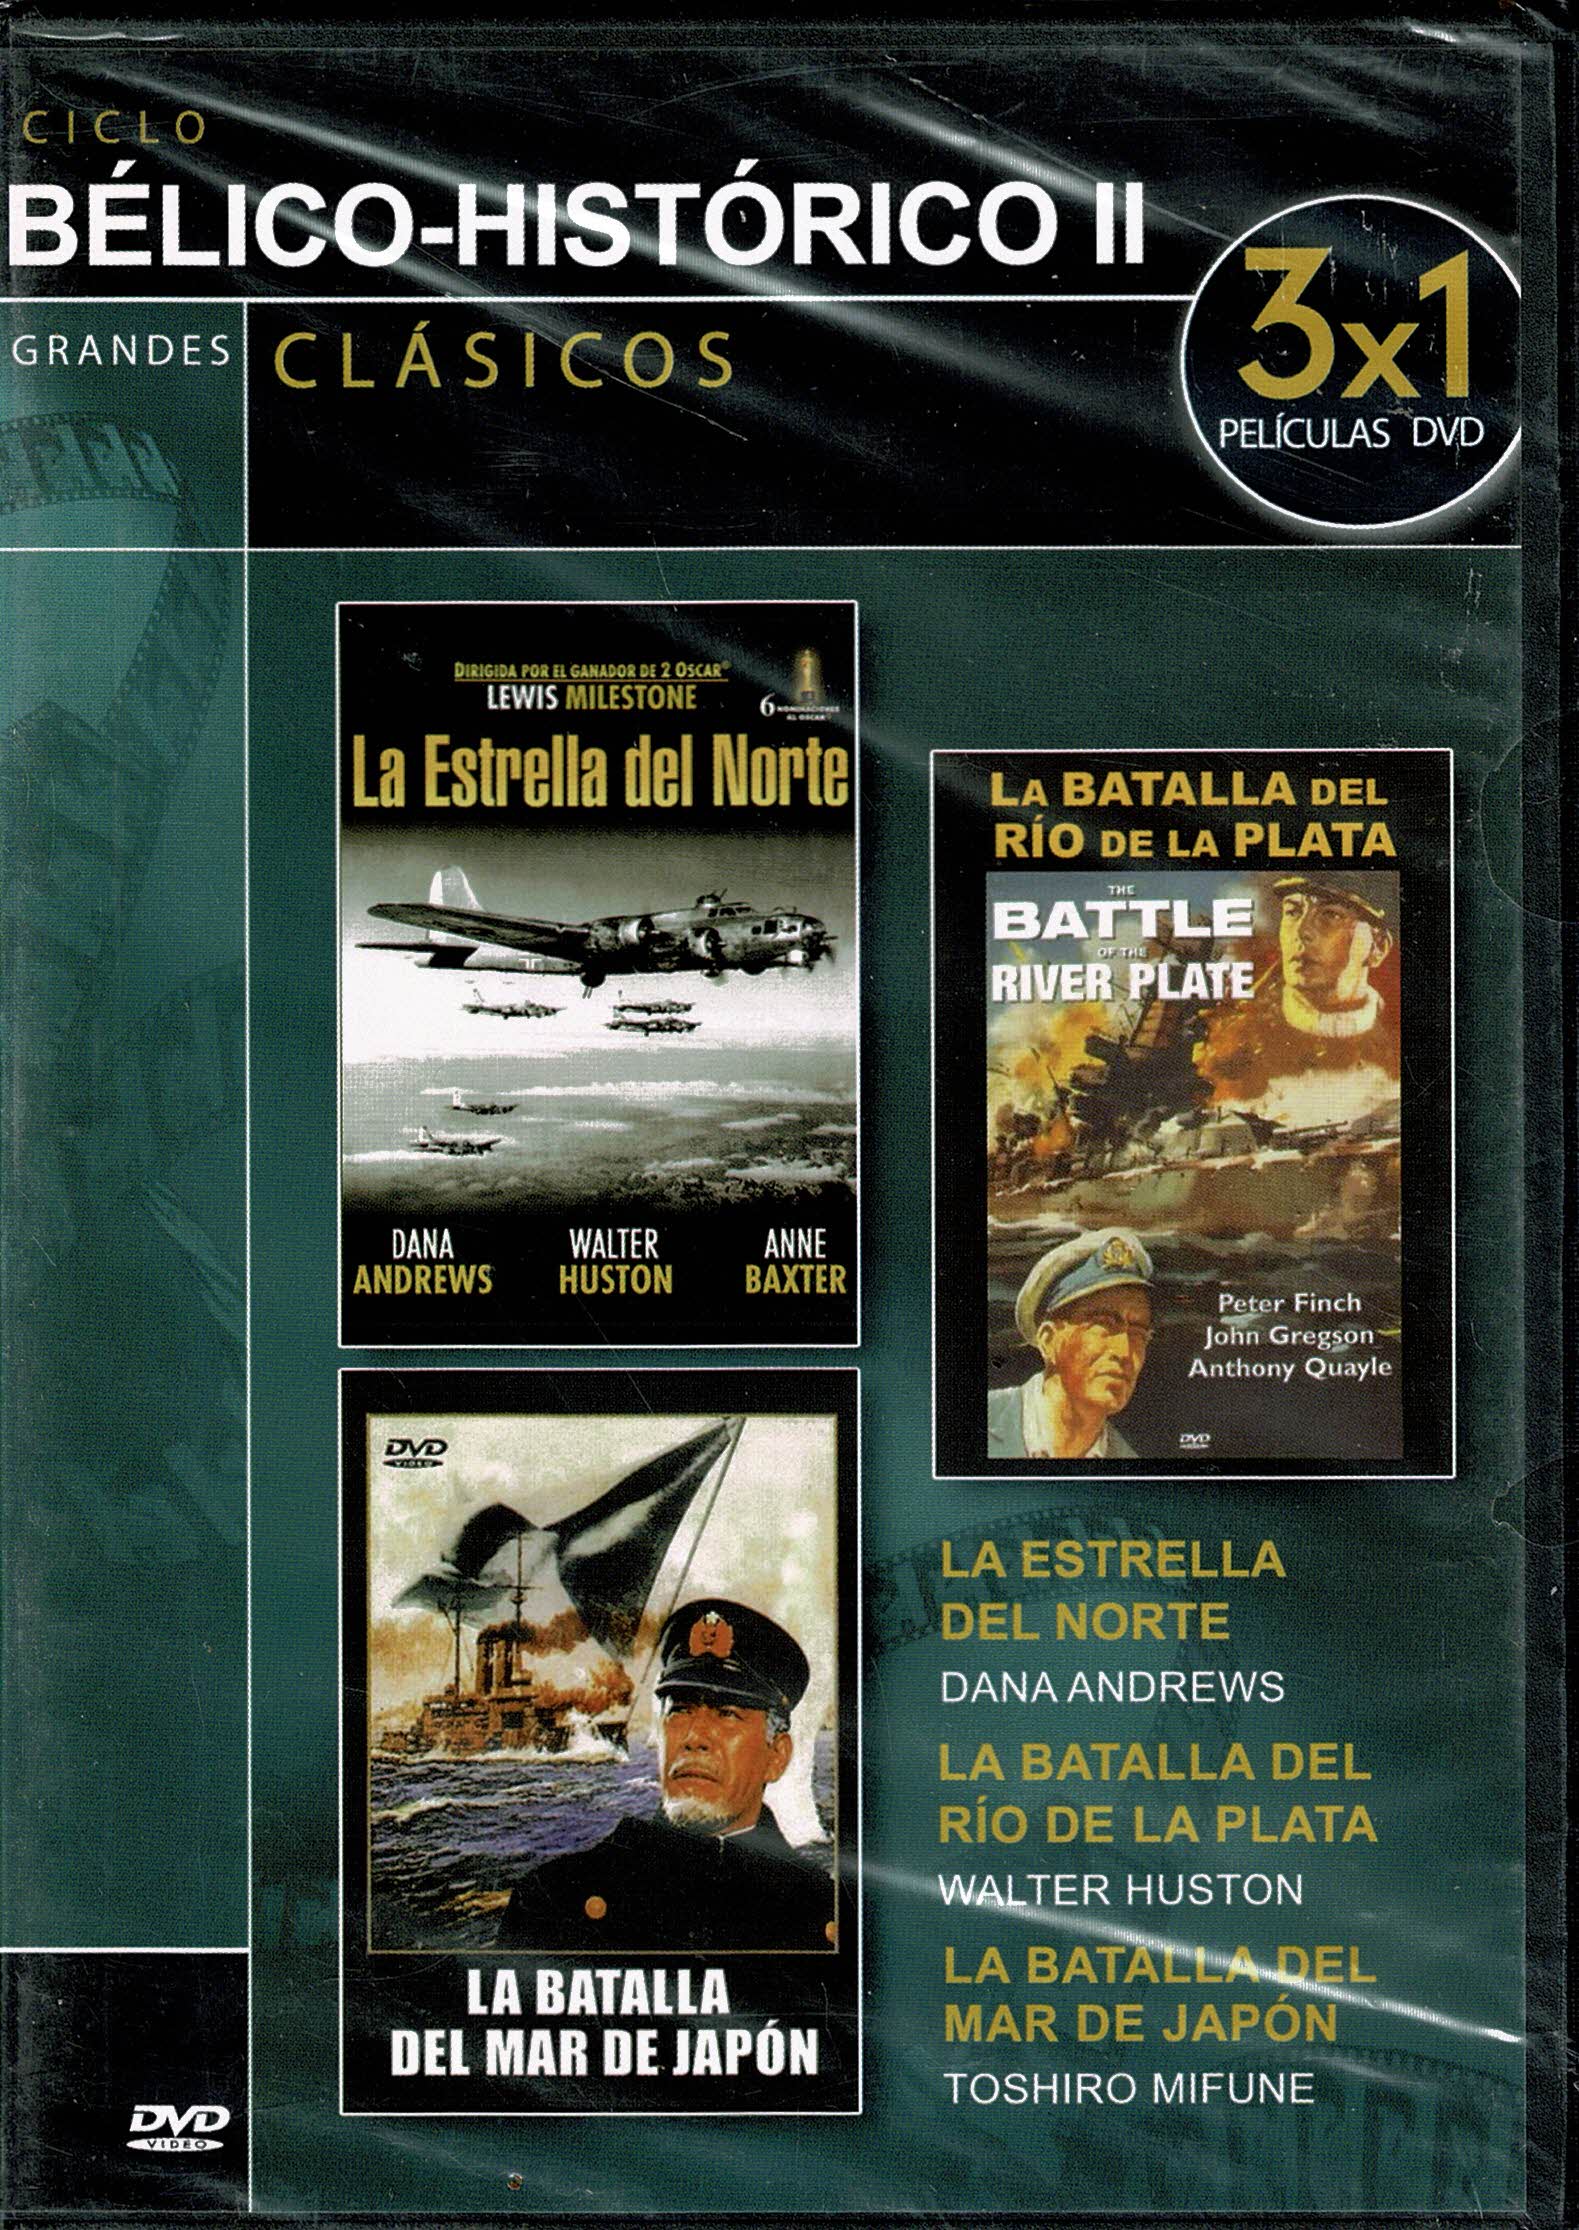 La Estrella del Norte (1943) / La Batalla del Río de la Plata (1956) / La Batalla del Mar de Japón (1969)  / 3X1